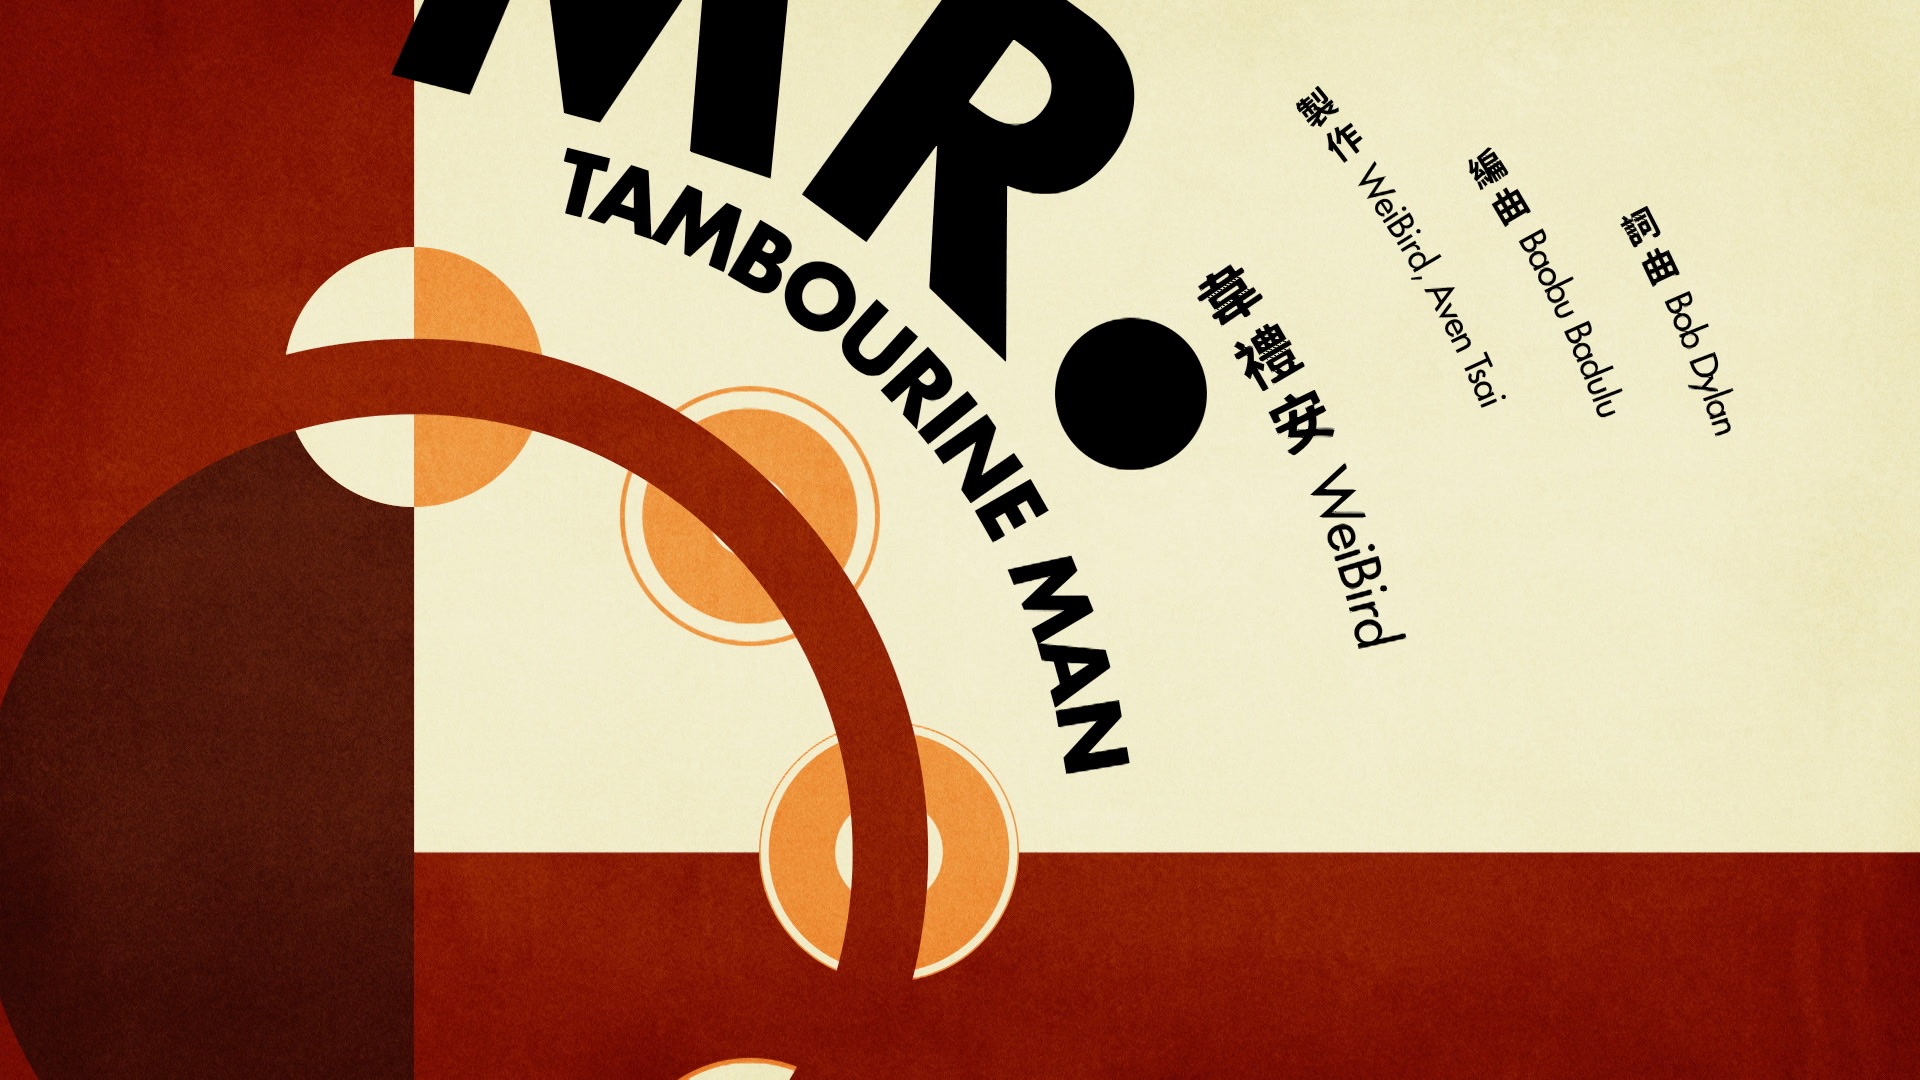 Mr. Tambourine Man (Lyrics version) - Music Video by WeiBird - Apple Music